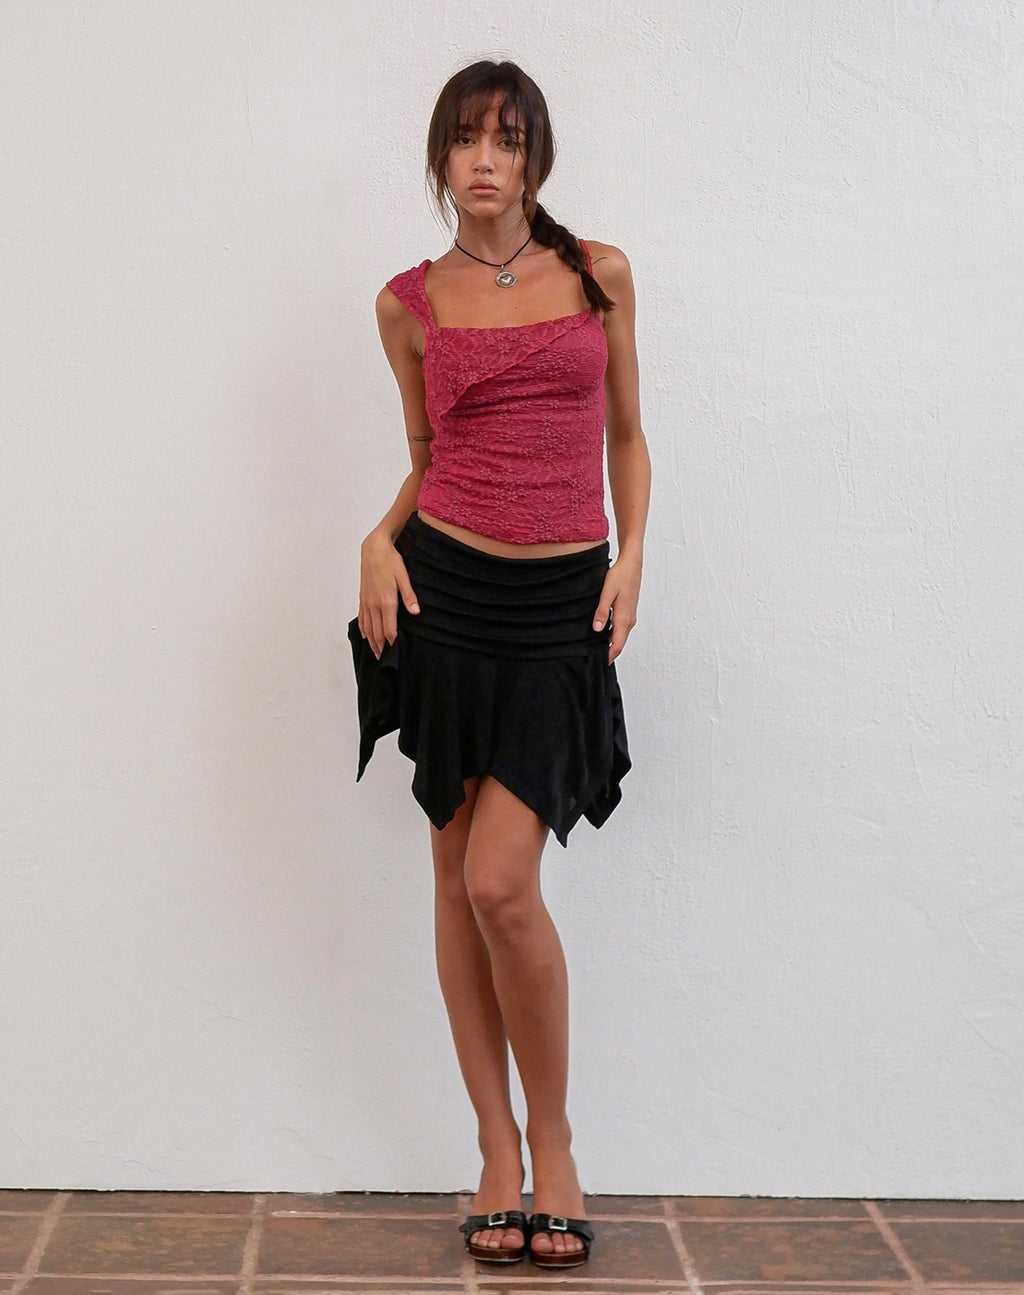 Tasdi Low Waist Slinky Mini Skirt in Black